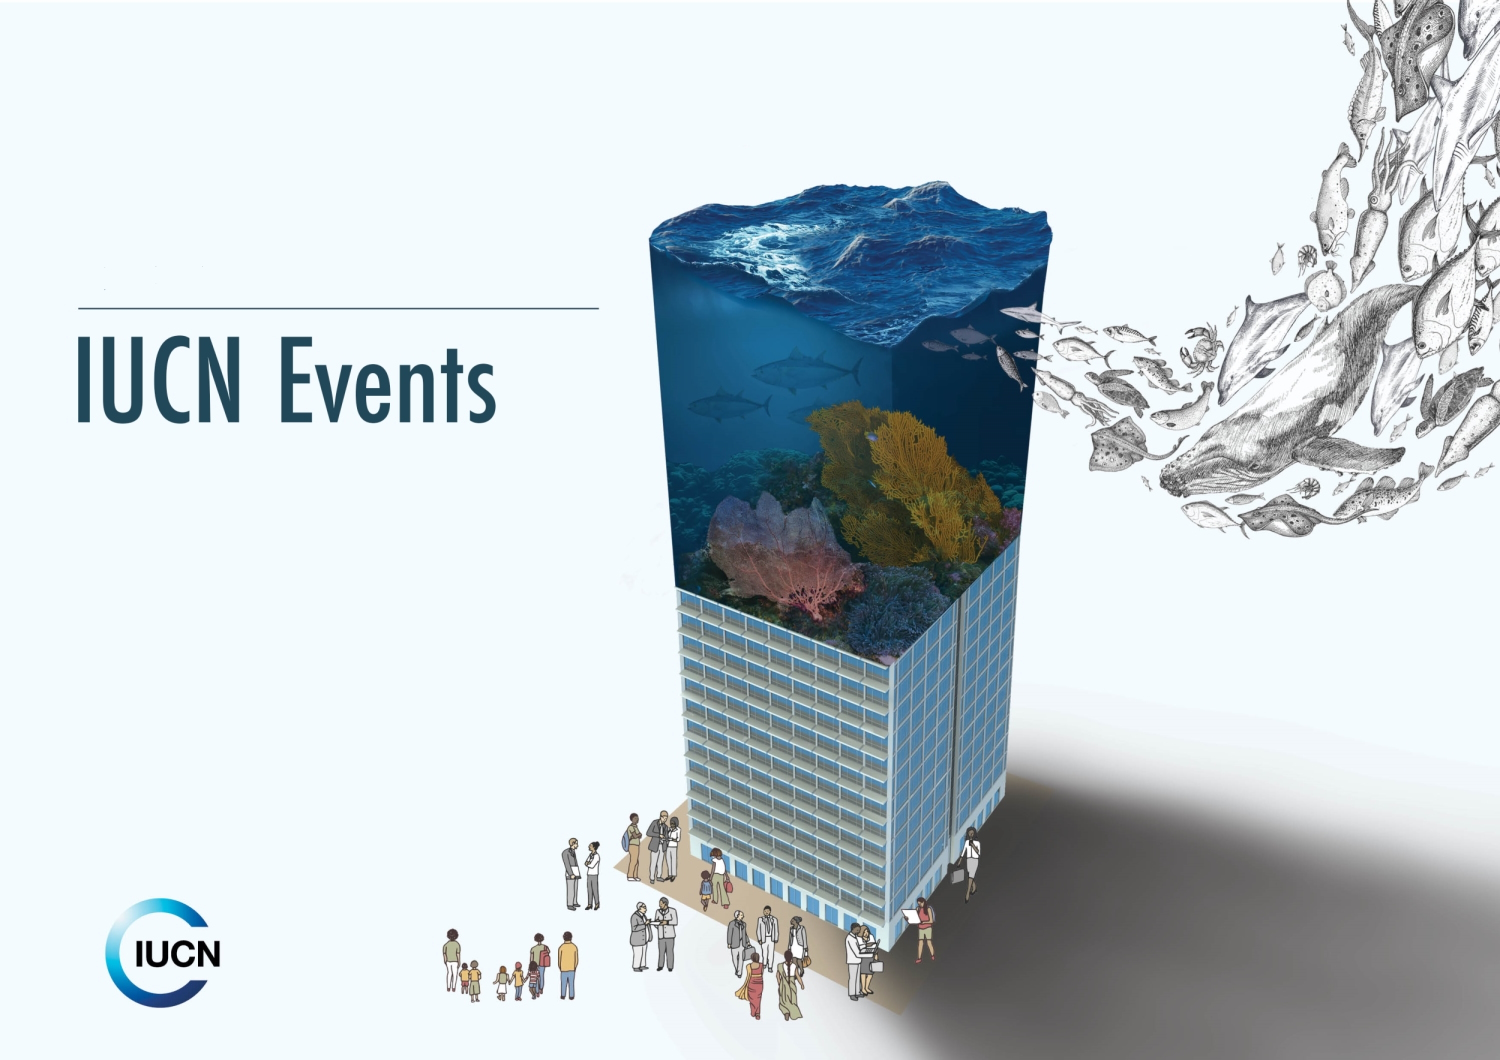 IUCN Ocean events - BBNJ Building